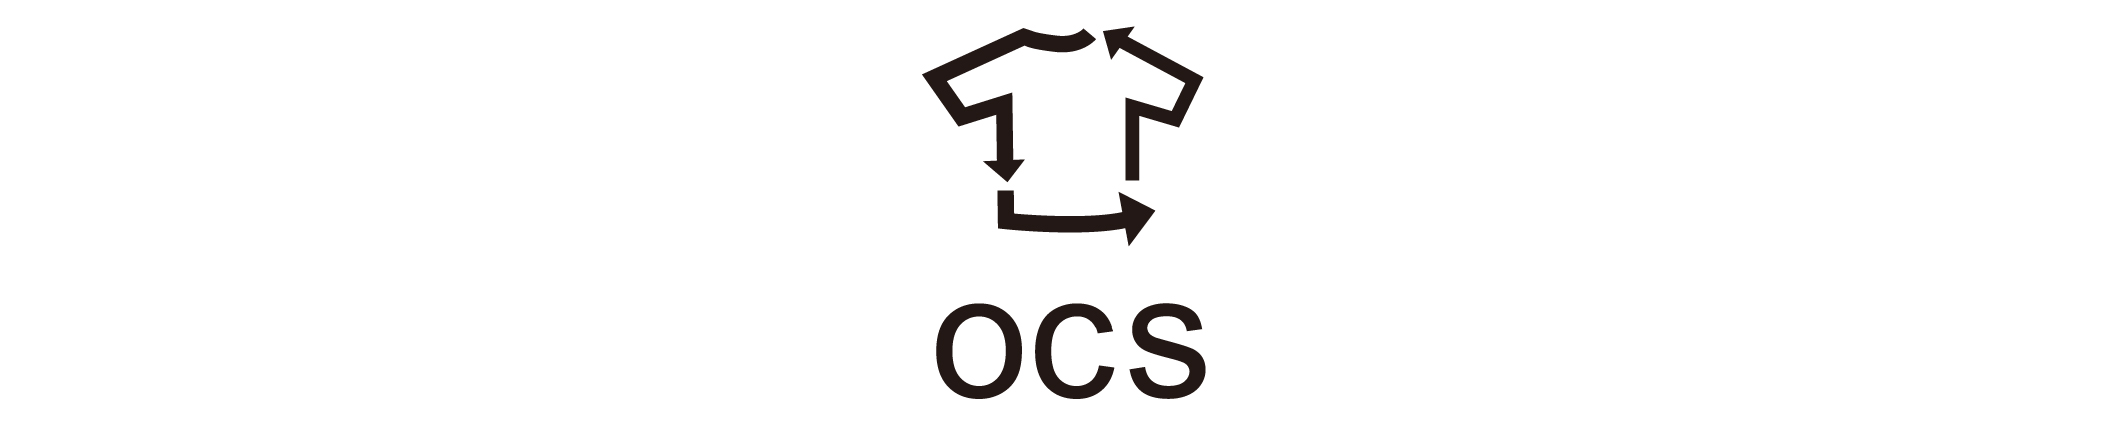 OCS  old clothes stool